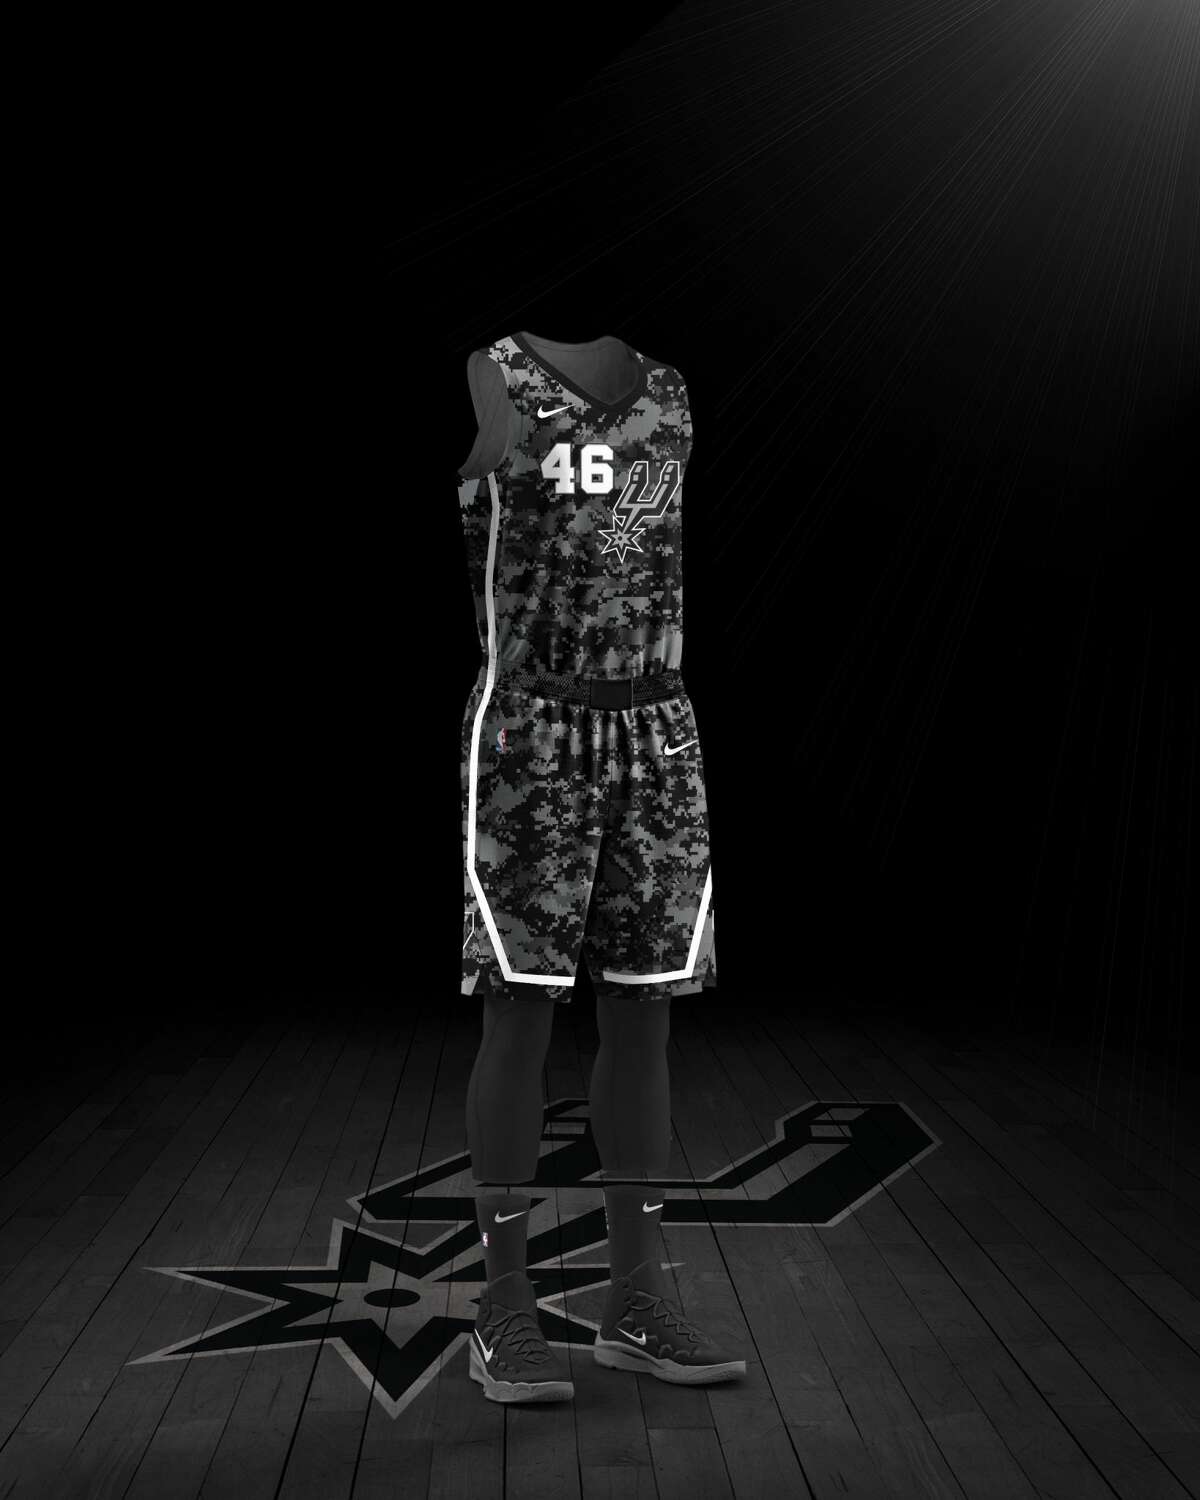 Spurs 'Earned Edition' uniform unveiled